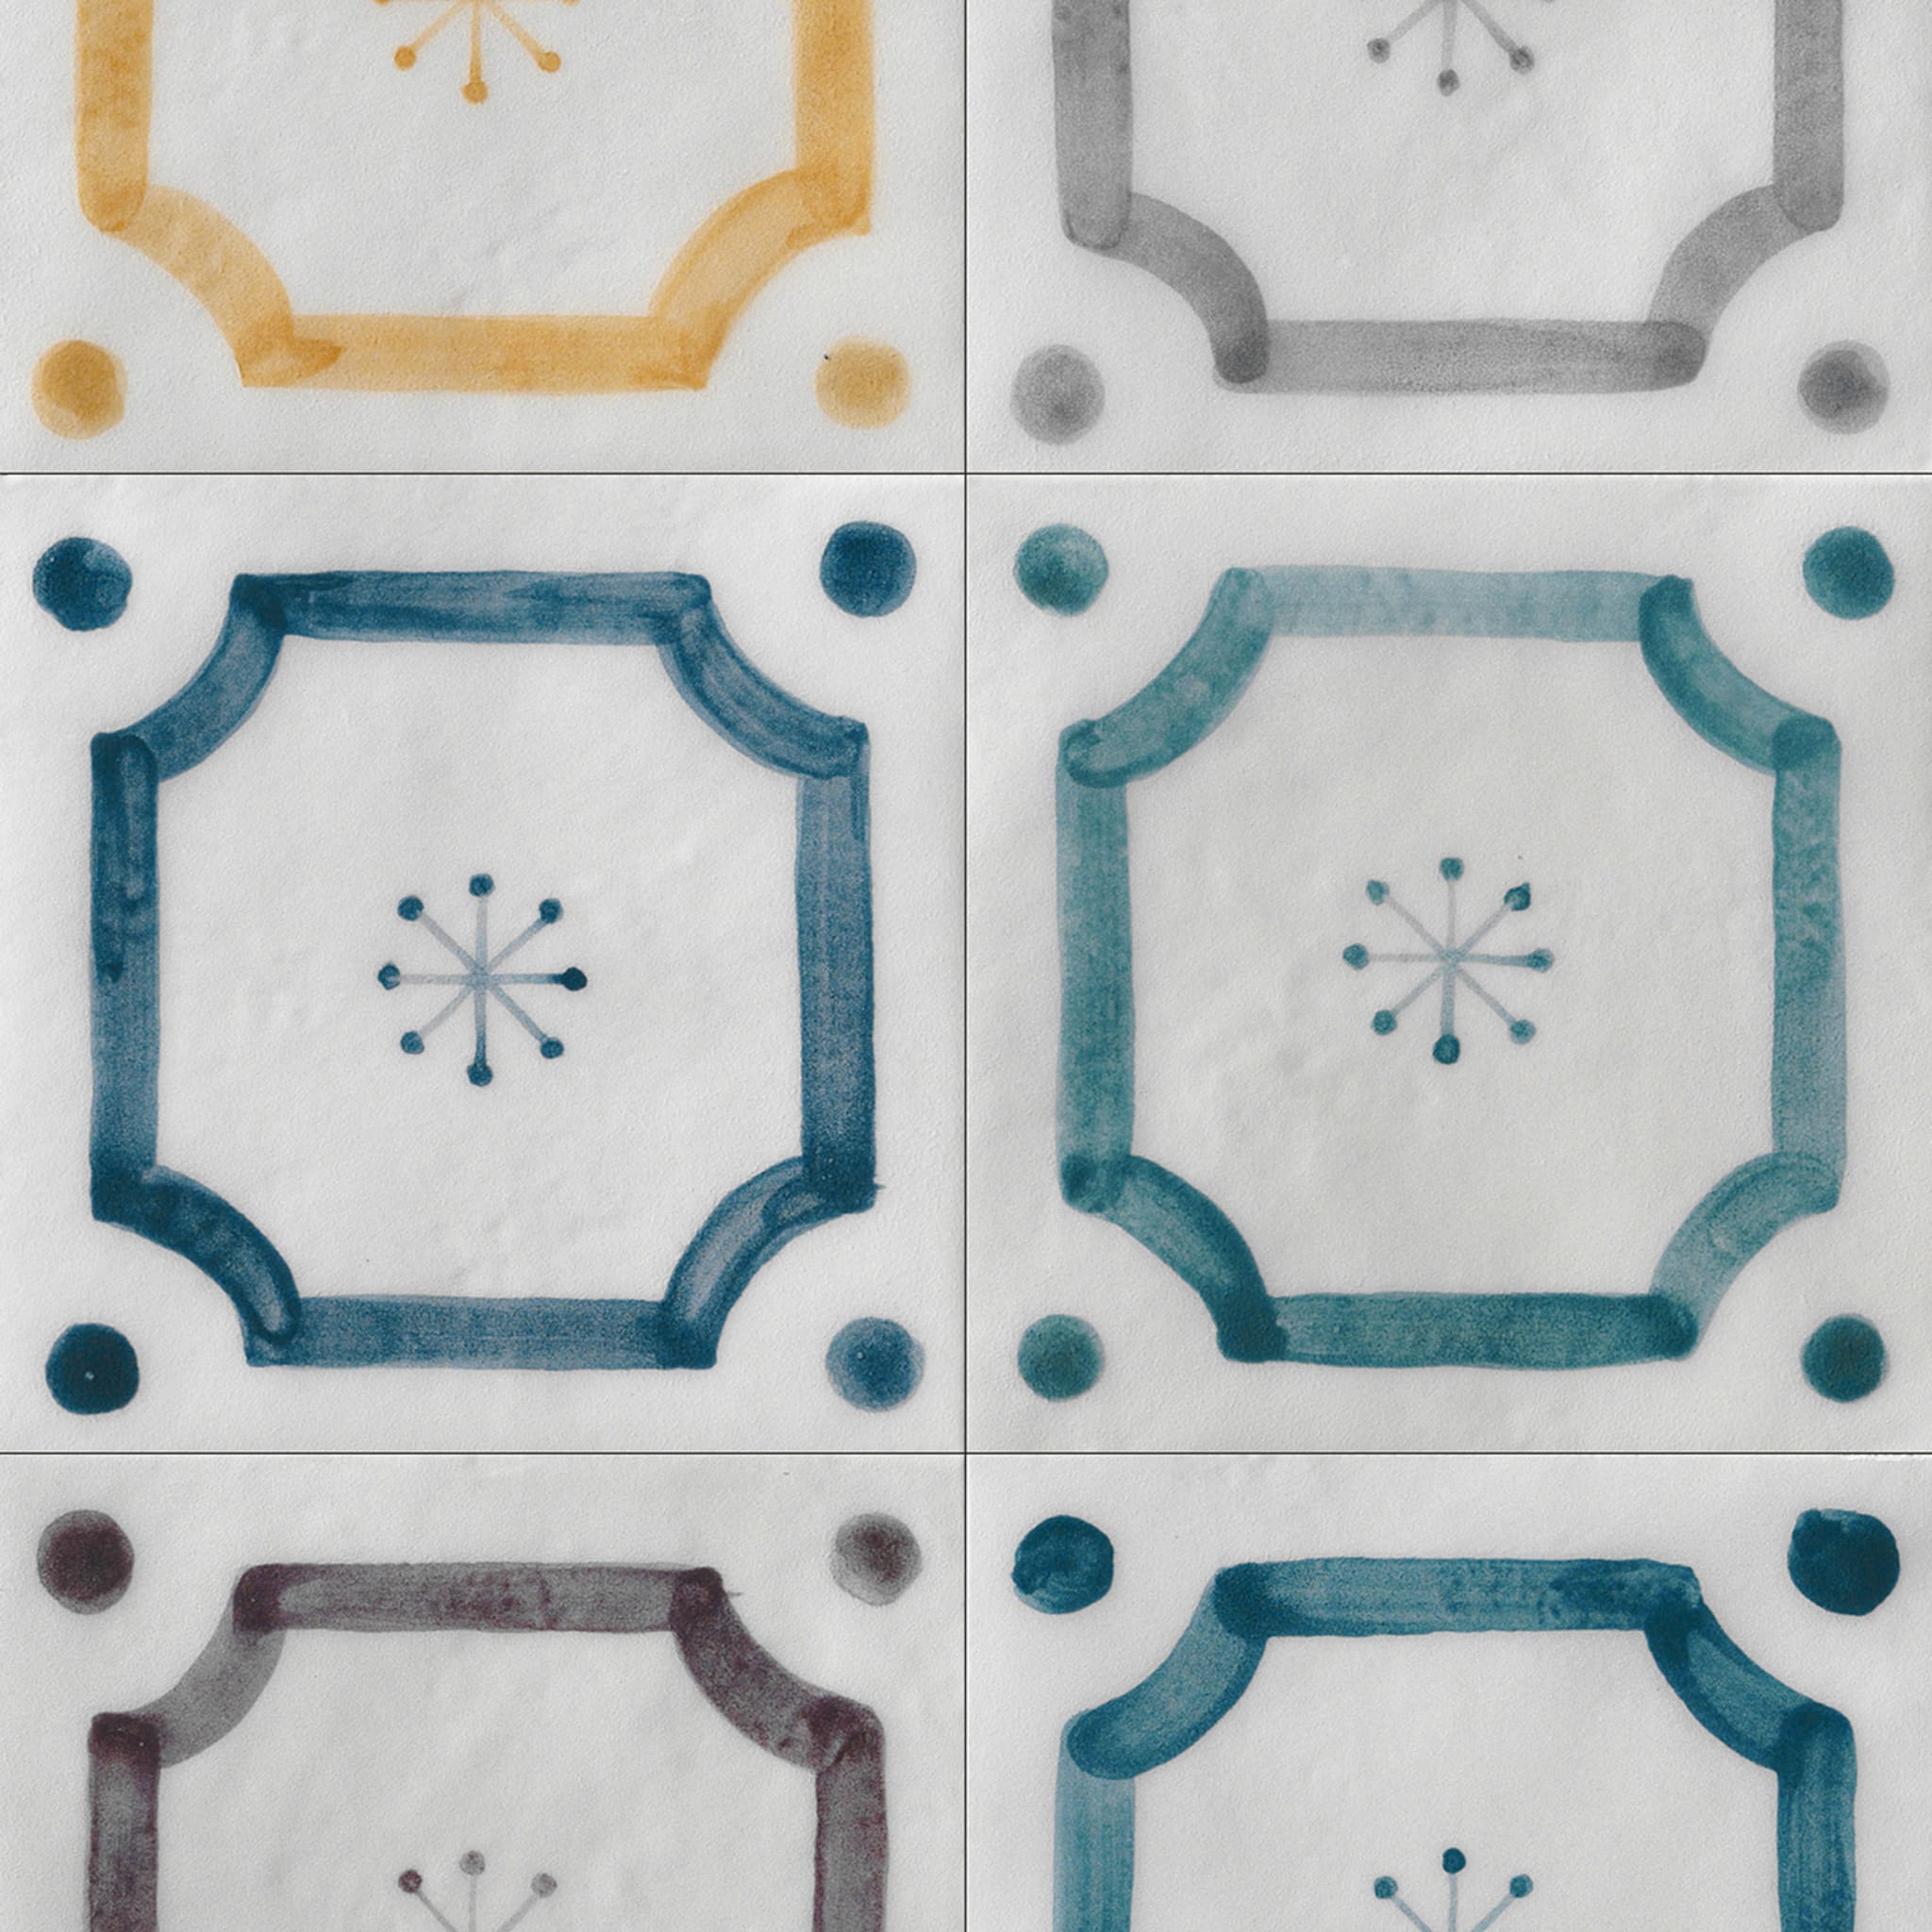 Ot Budoni Azure Set of 24 Square Tiles - Alternative view 1